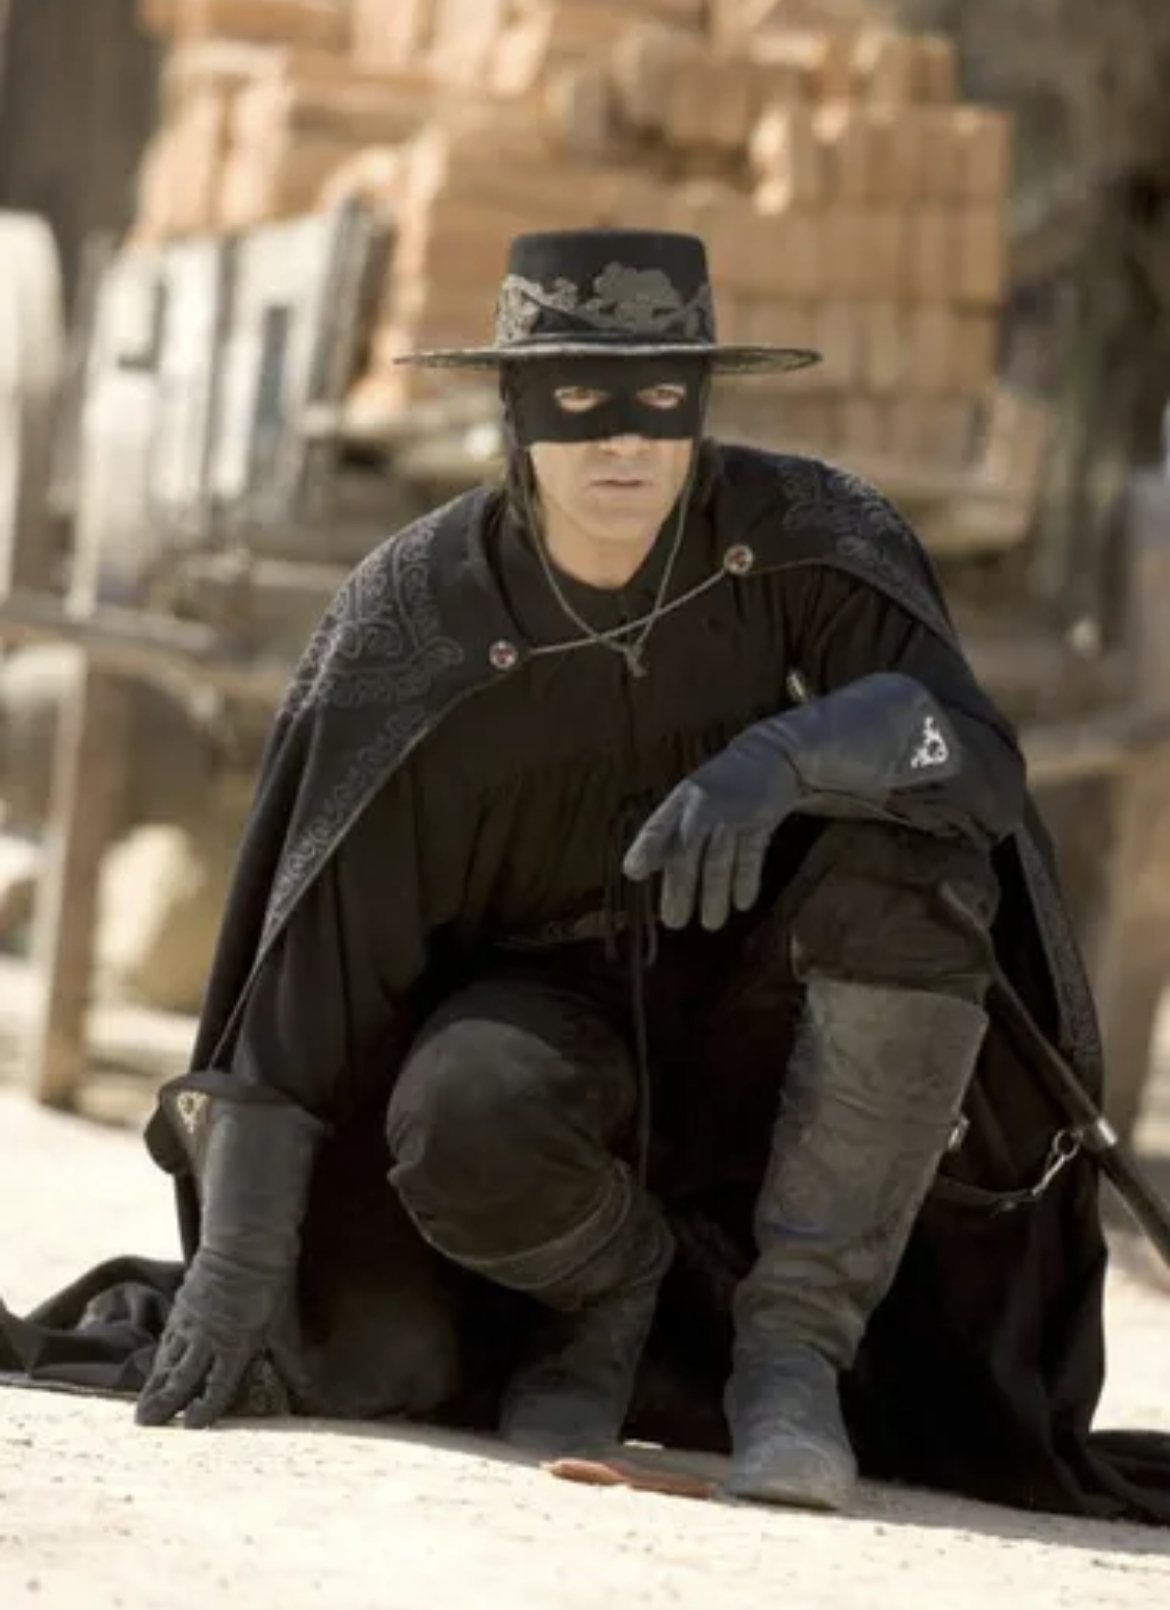 WTB replica Zorro Costume from the Mask of Zorro